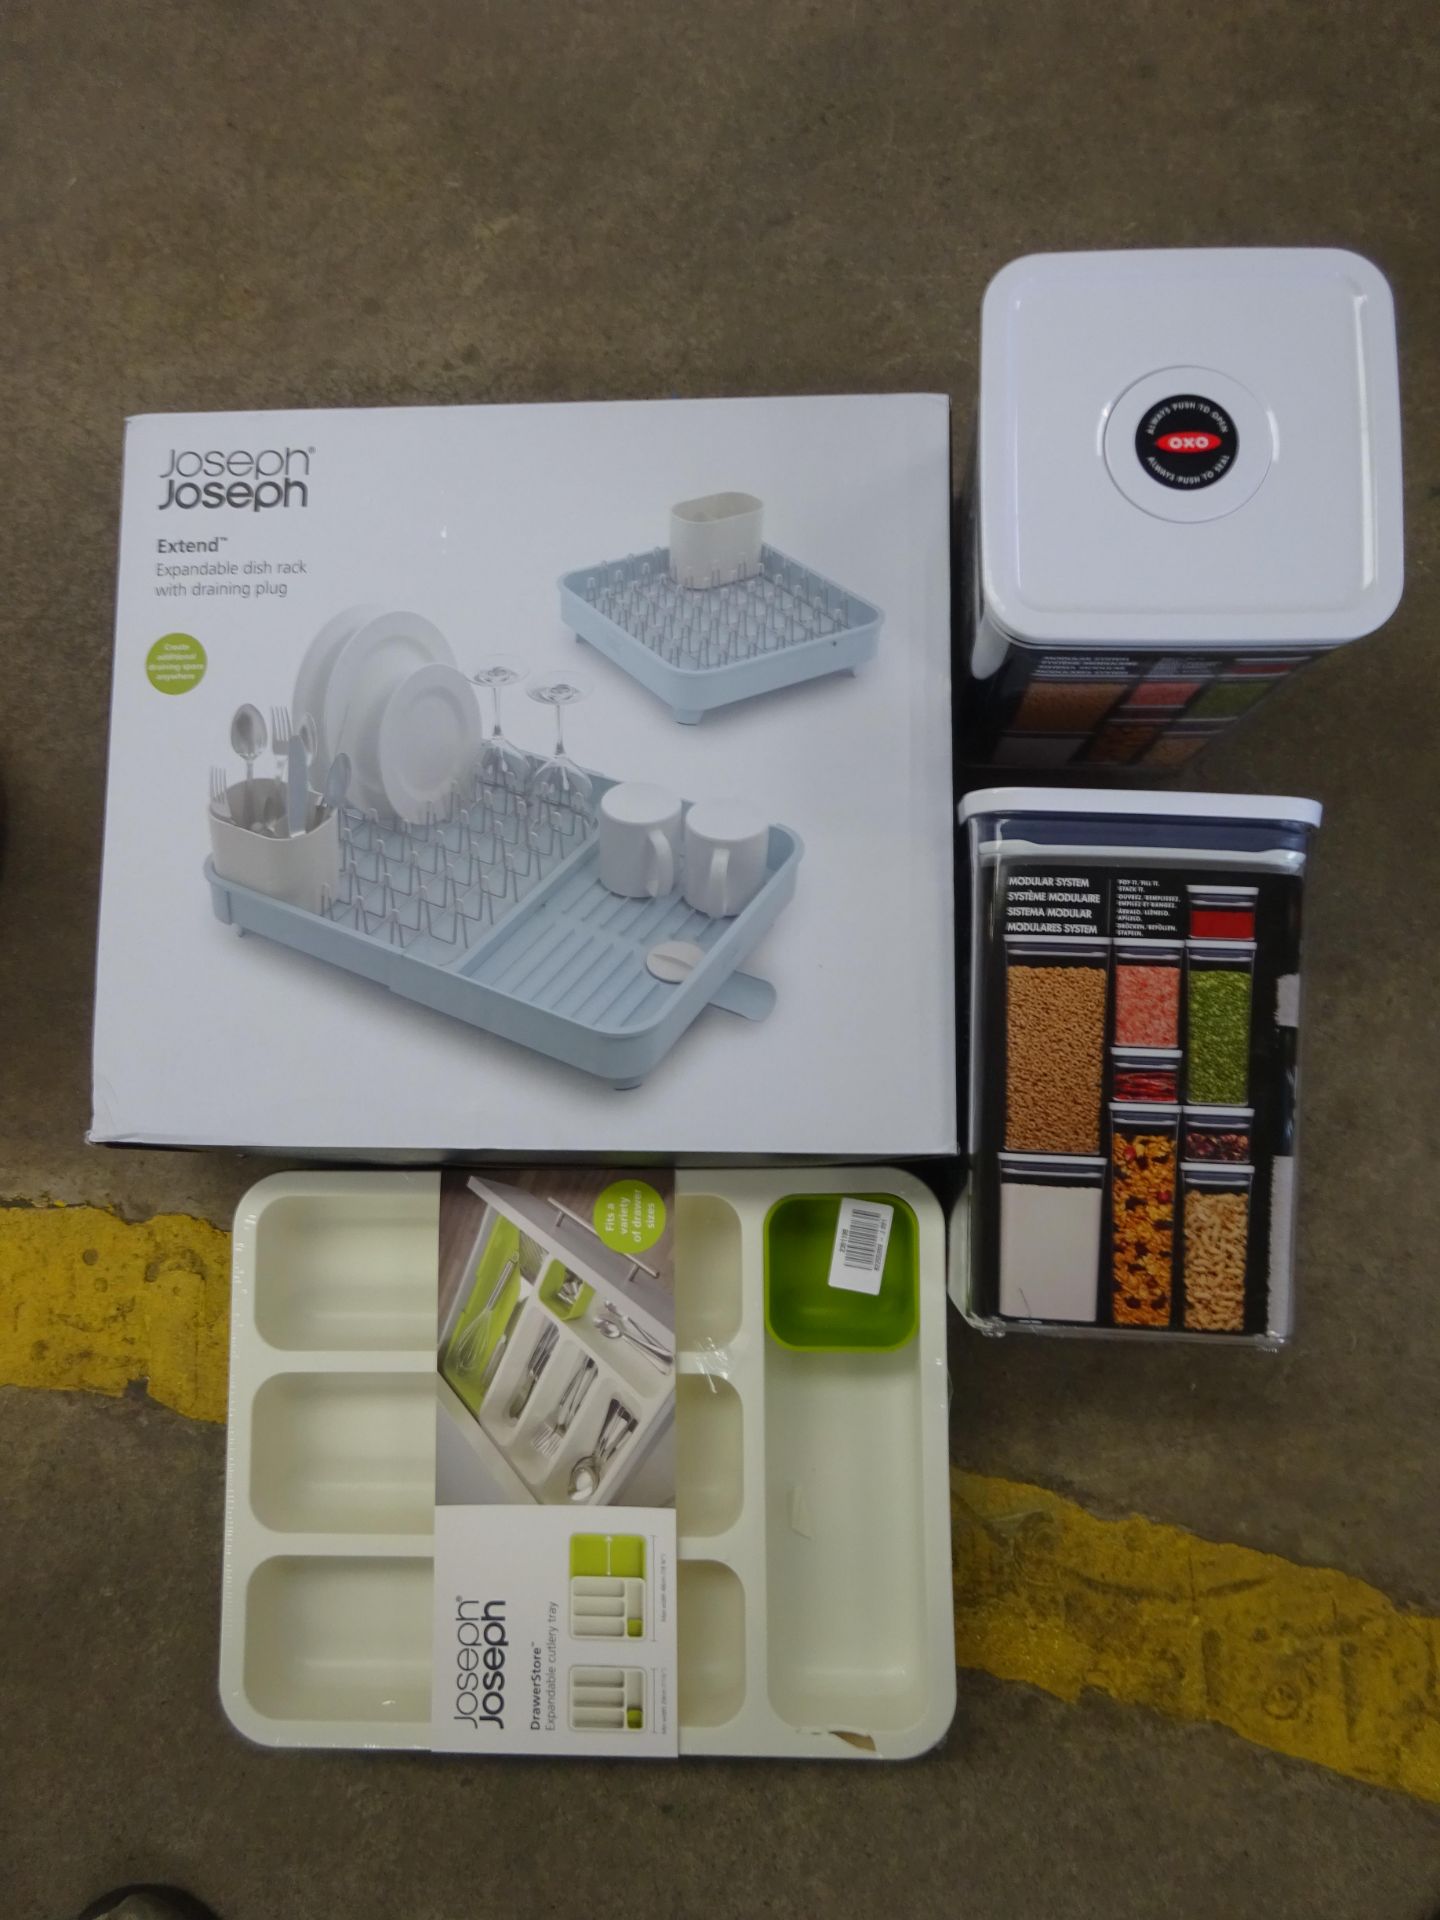 x 2 Oxo plastic containers - Joseph & Joseph dish rack & cutlery tray - damage to the corner